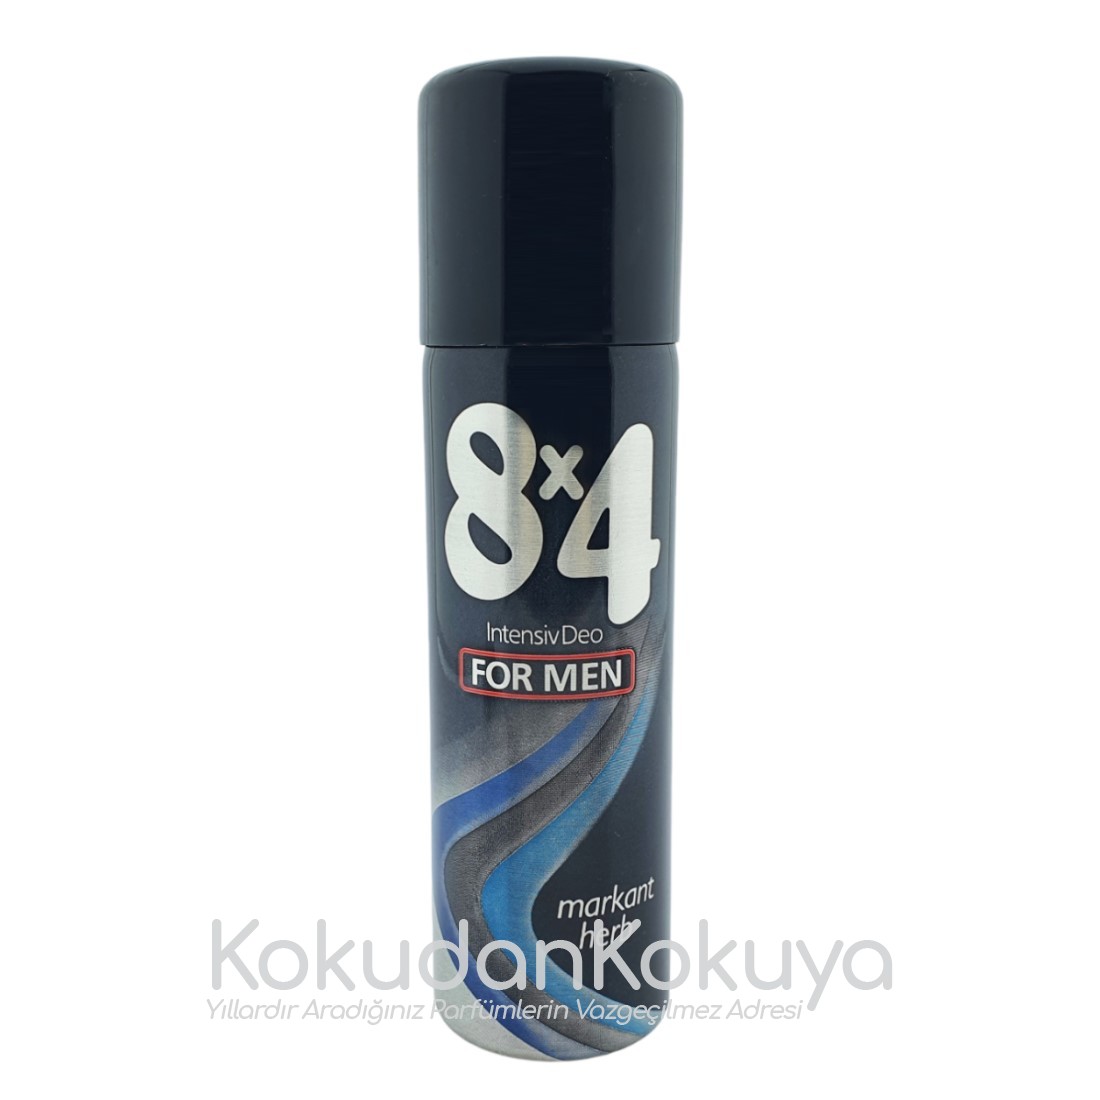 8x4 Intensiv Deo Deodorant Erkek 200ml Deodorant Spray (Metal) 